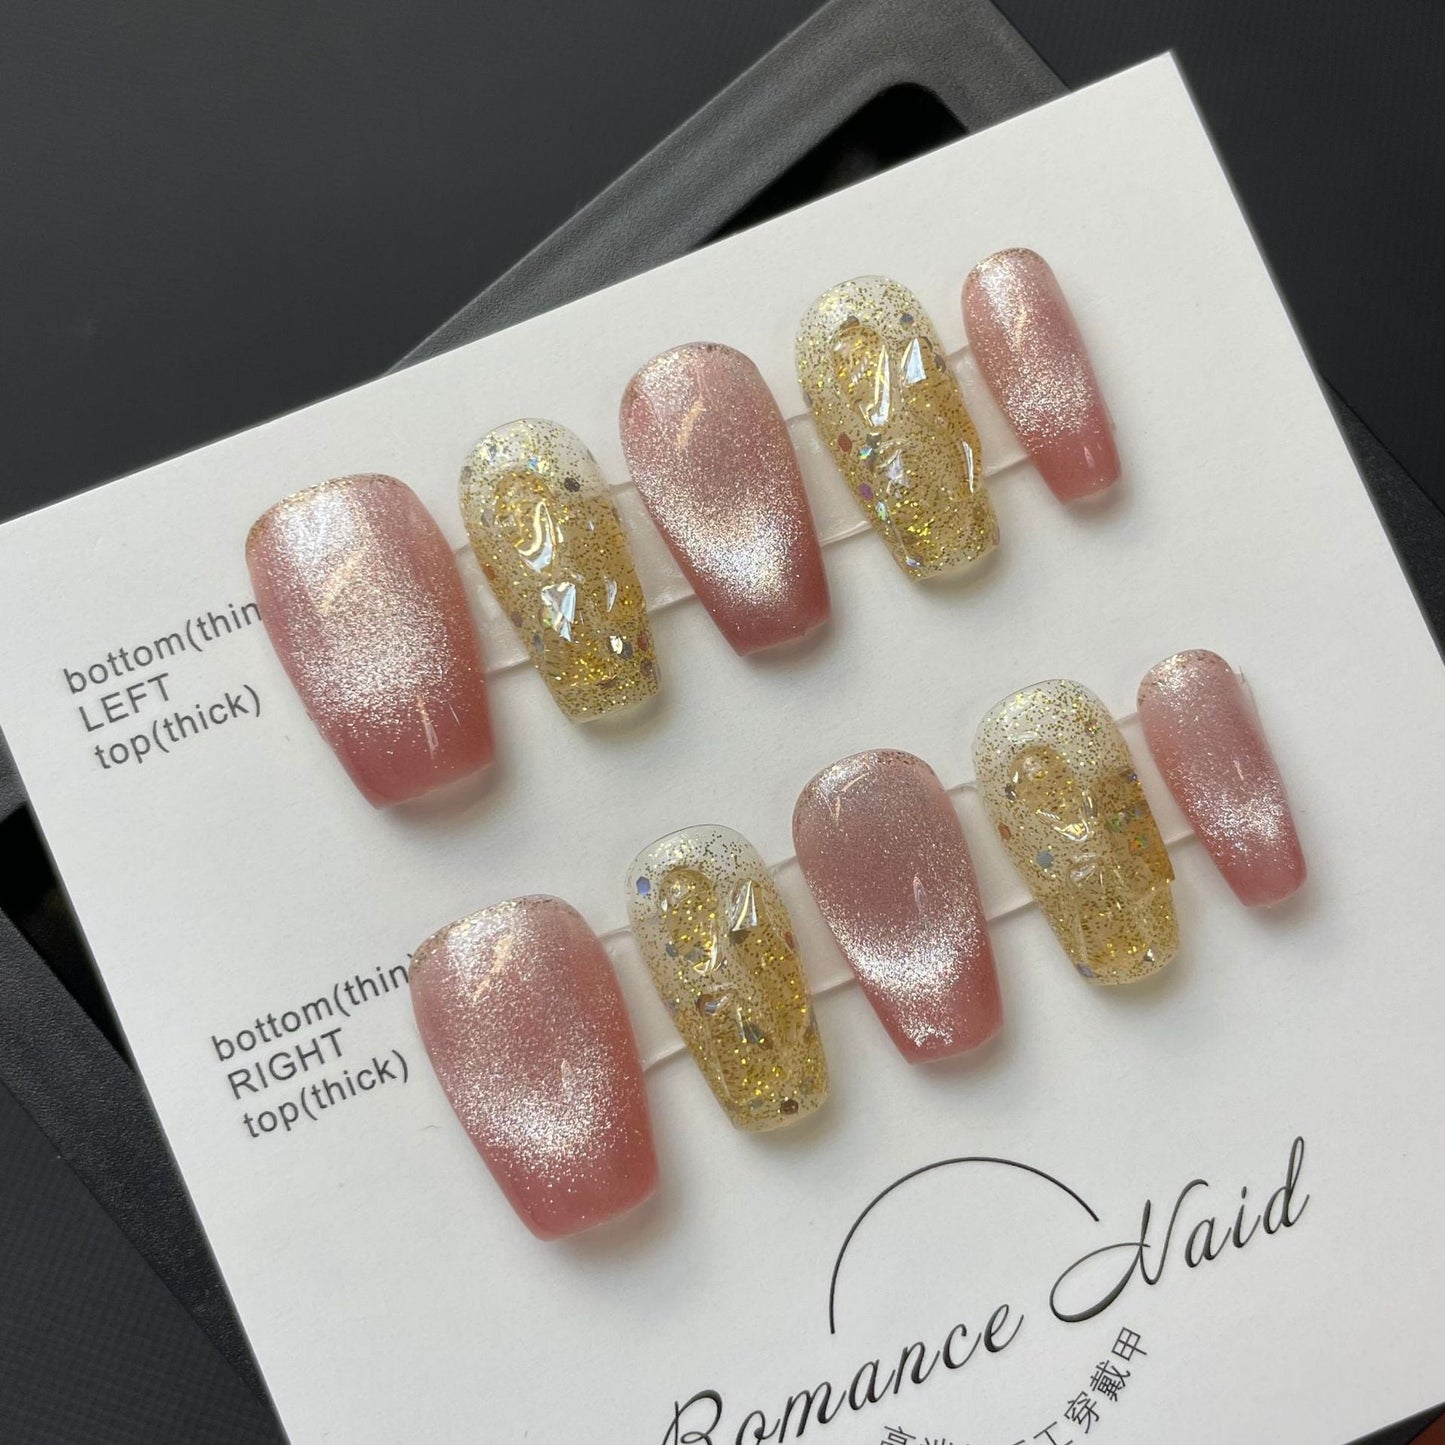 637 Cateye Effect press on nails 100% handmade false nailspink golden